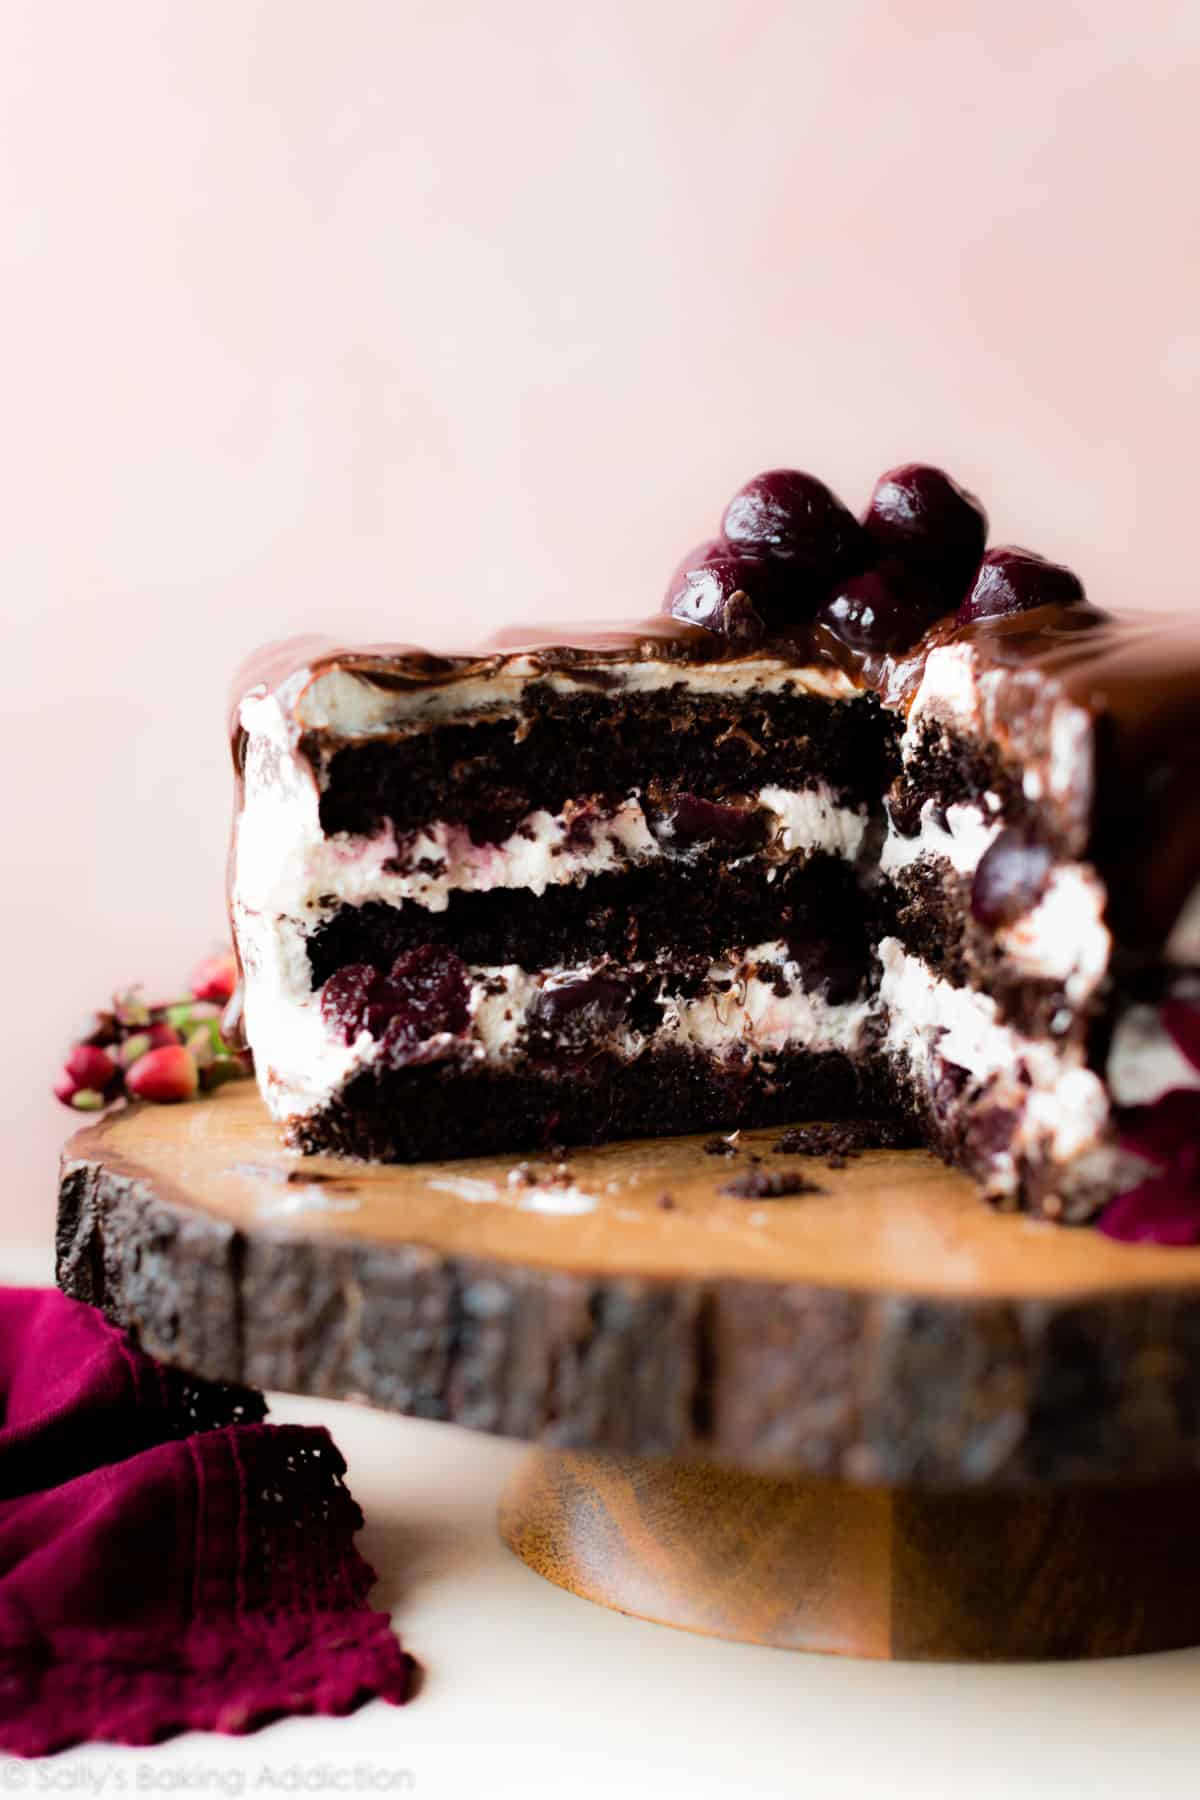 Super-moist chocolate cake, whipped cream, and dark sweet cherries are Black Forest Cake! Homemade chocolate cake on sallysbakingaddiction.com